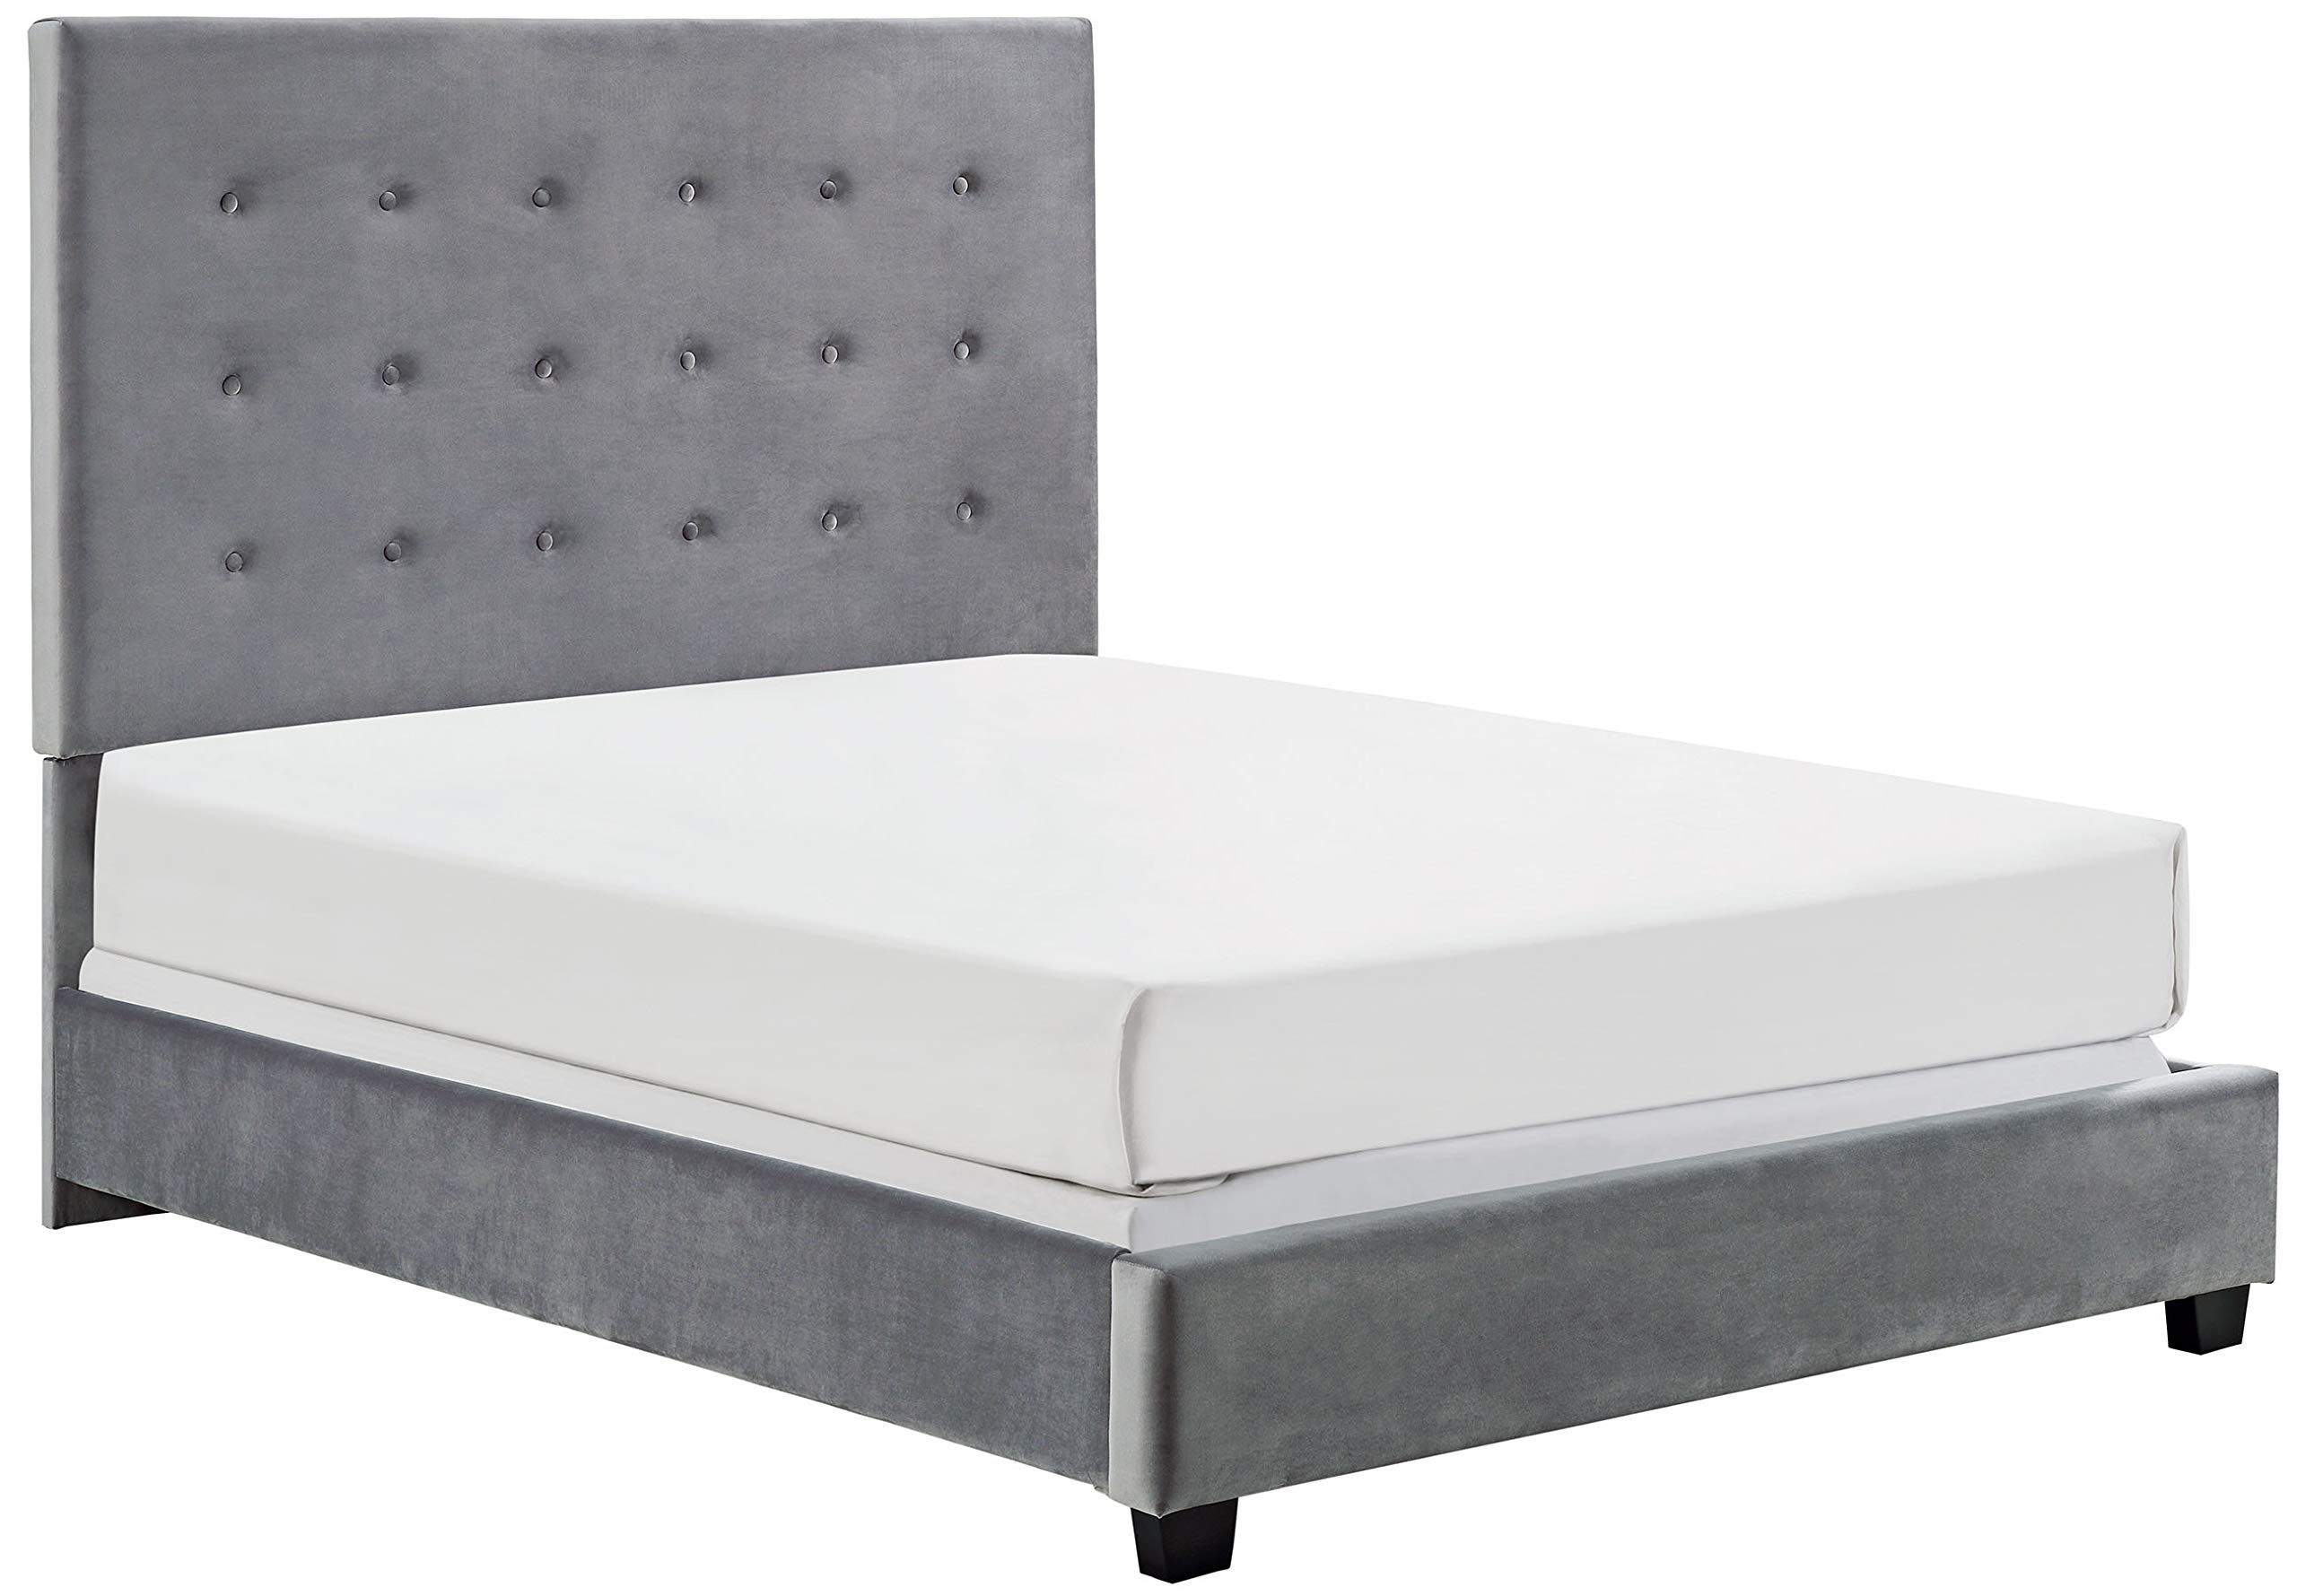 Crosley Furniture KF706005SL Reston Upholstered Platform Bed with Square Headboard, King, Shale Microfiber